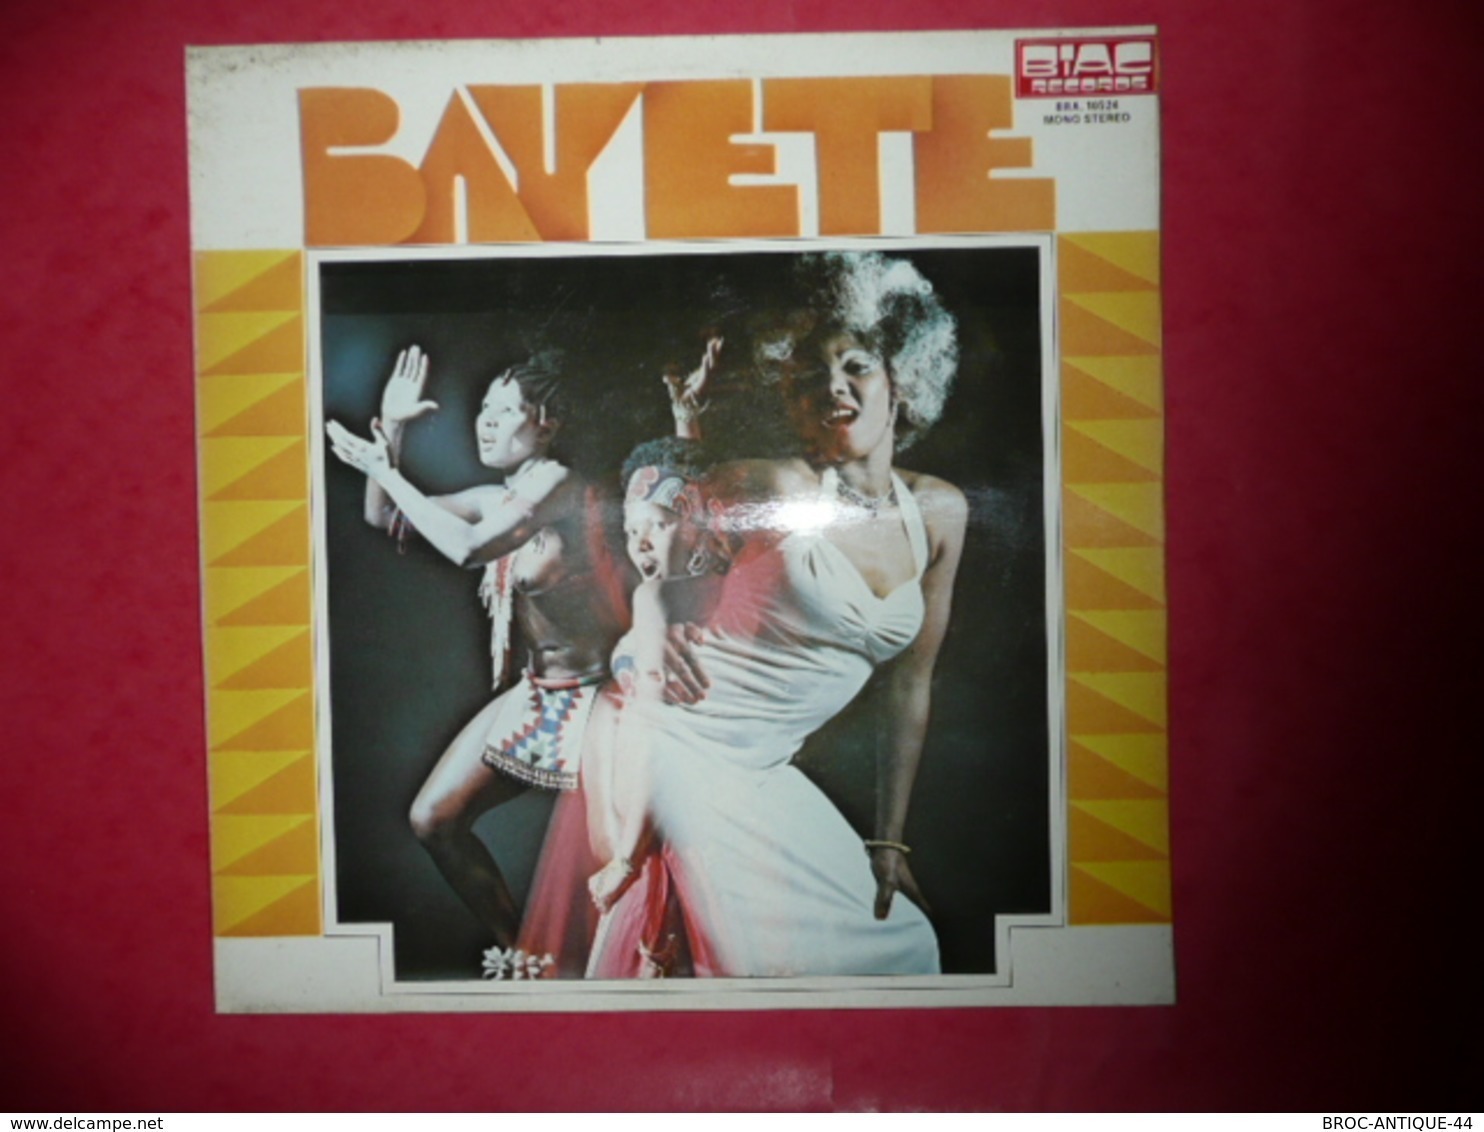 LP33 N°622 - BAYETE - COMPILATION 10 TITRES FUNK SOUL FOLK WORLD COUNTRY AFROBEAT - Soul - R&B